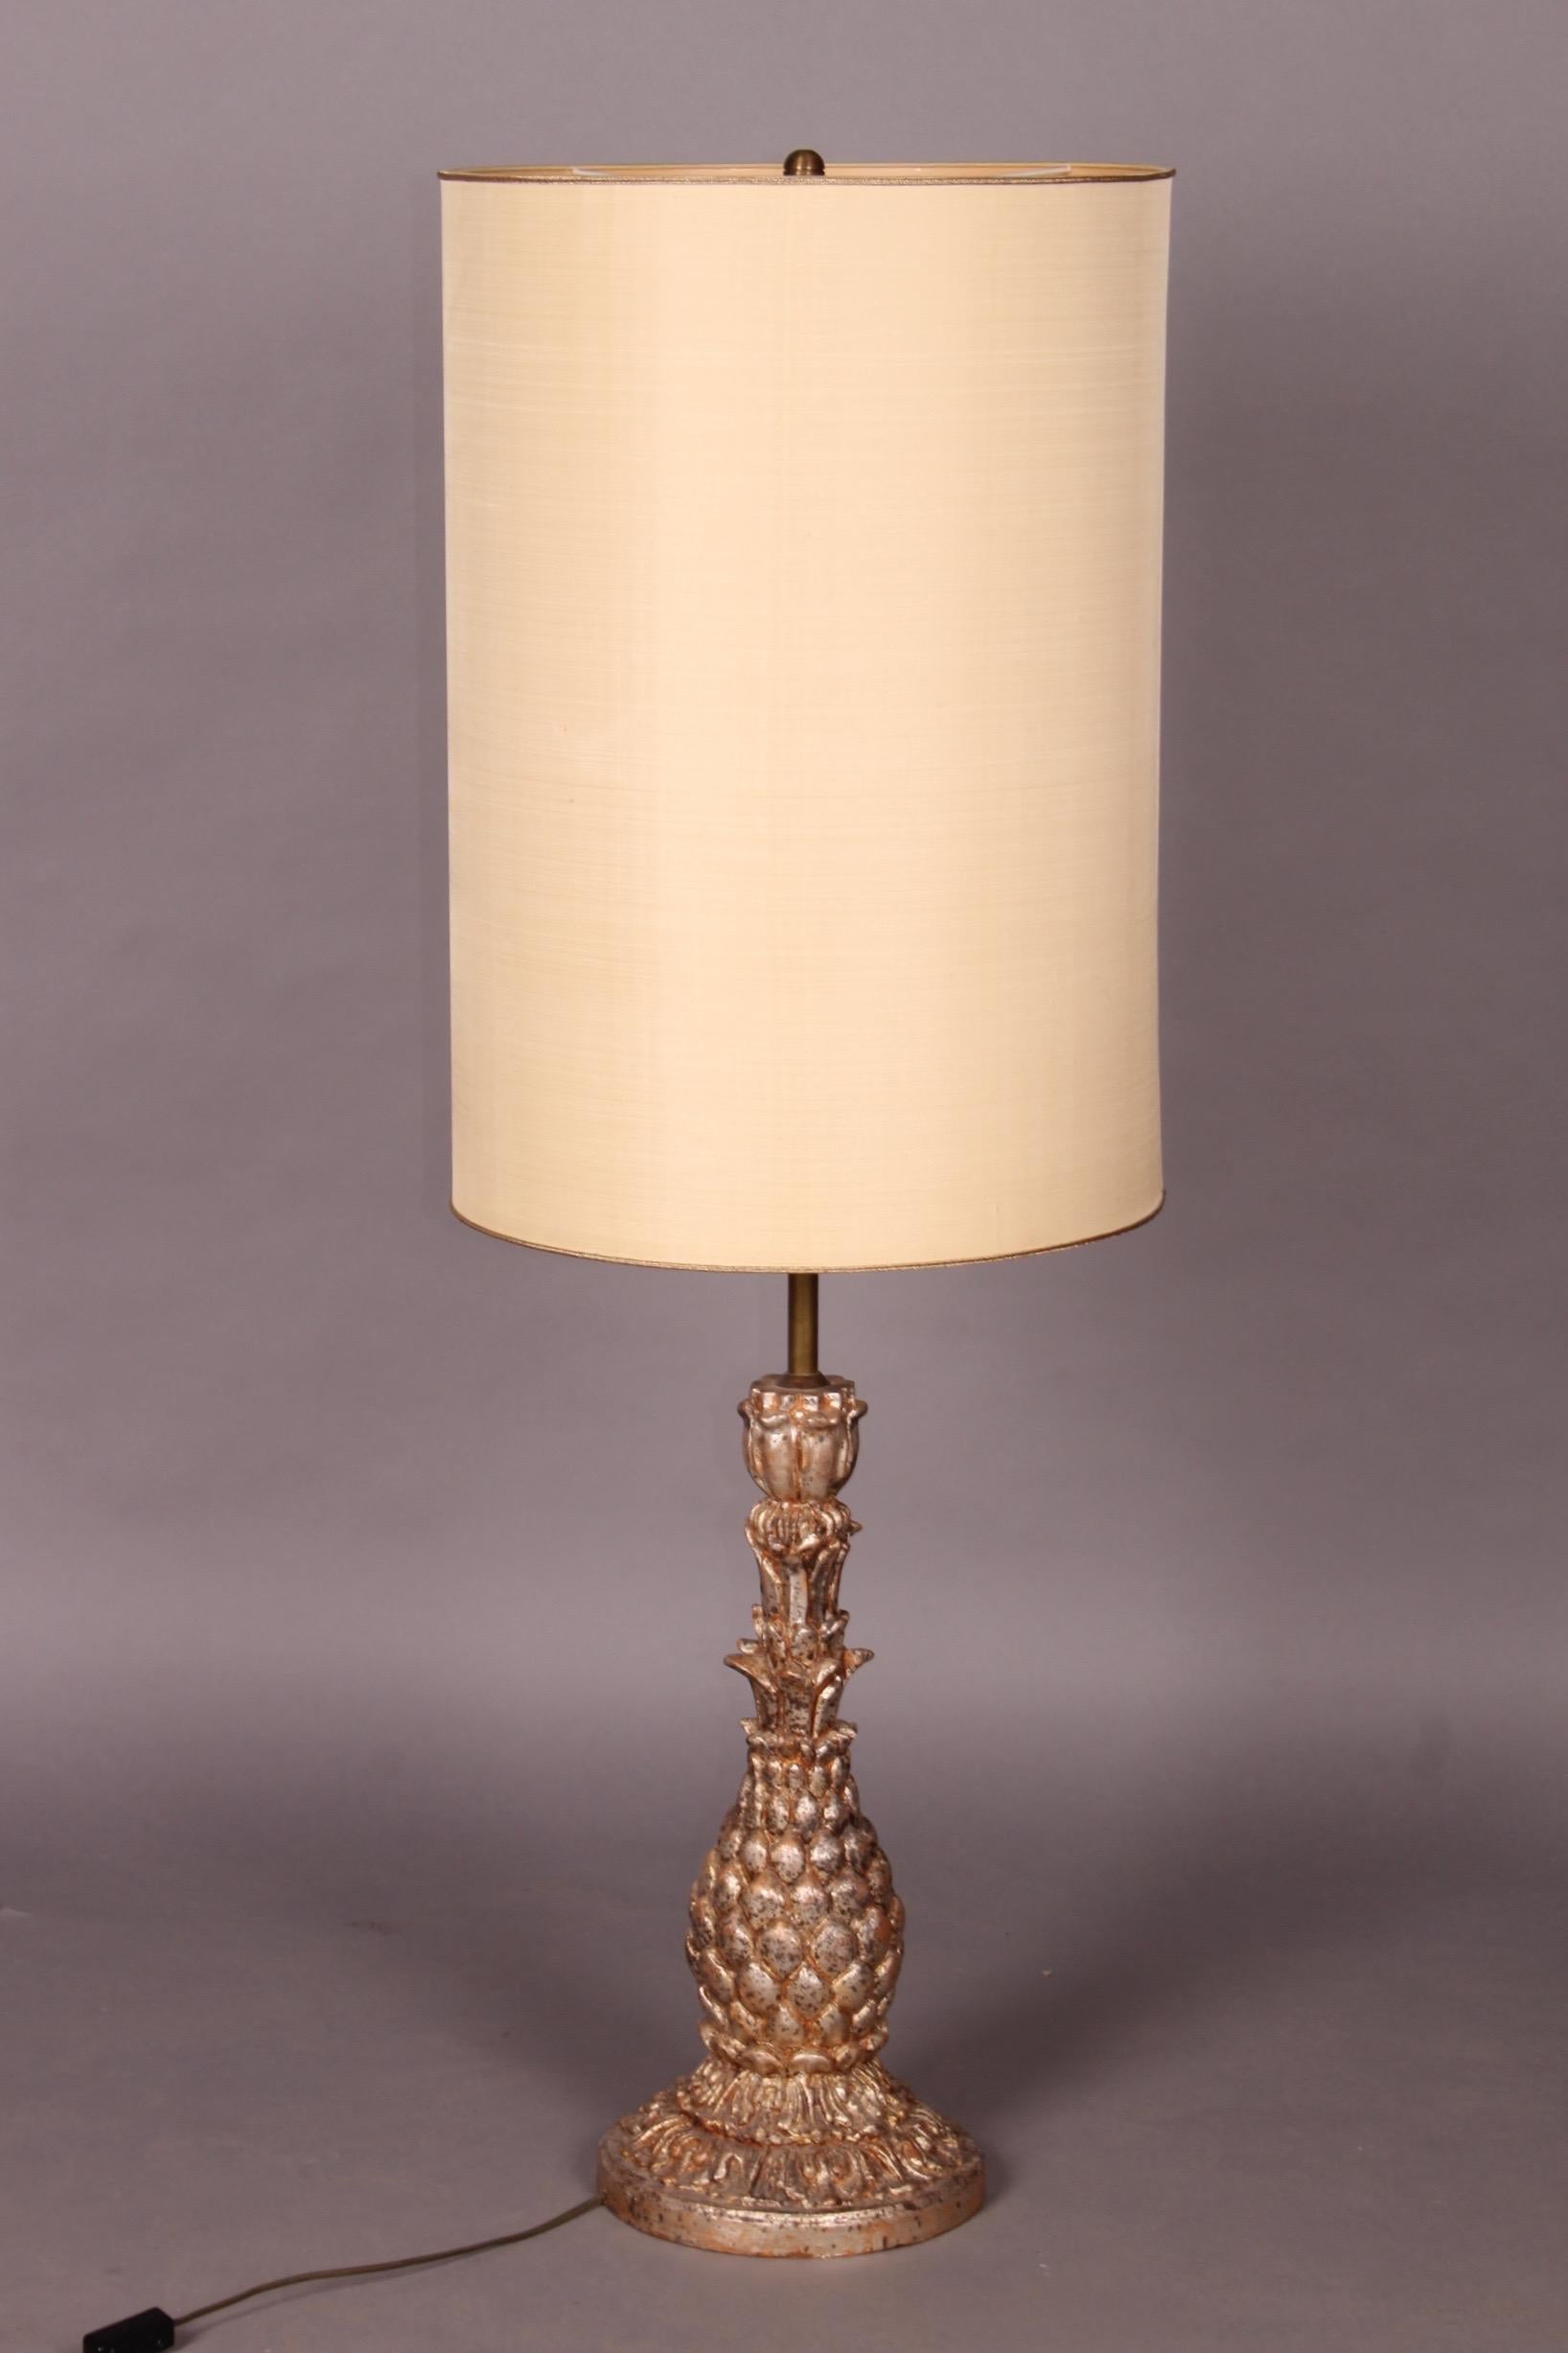 Wooden pineapple lamp.